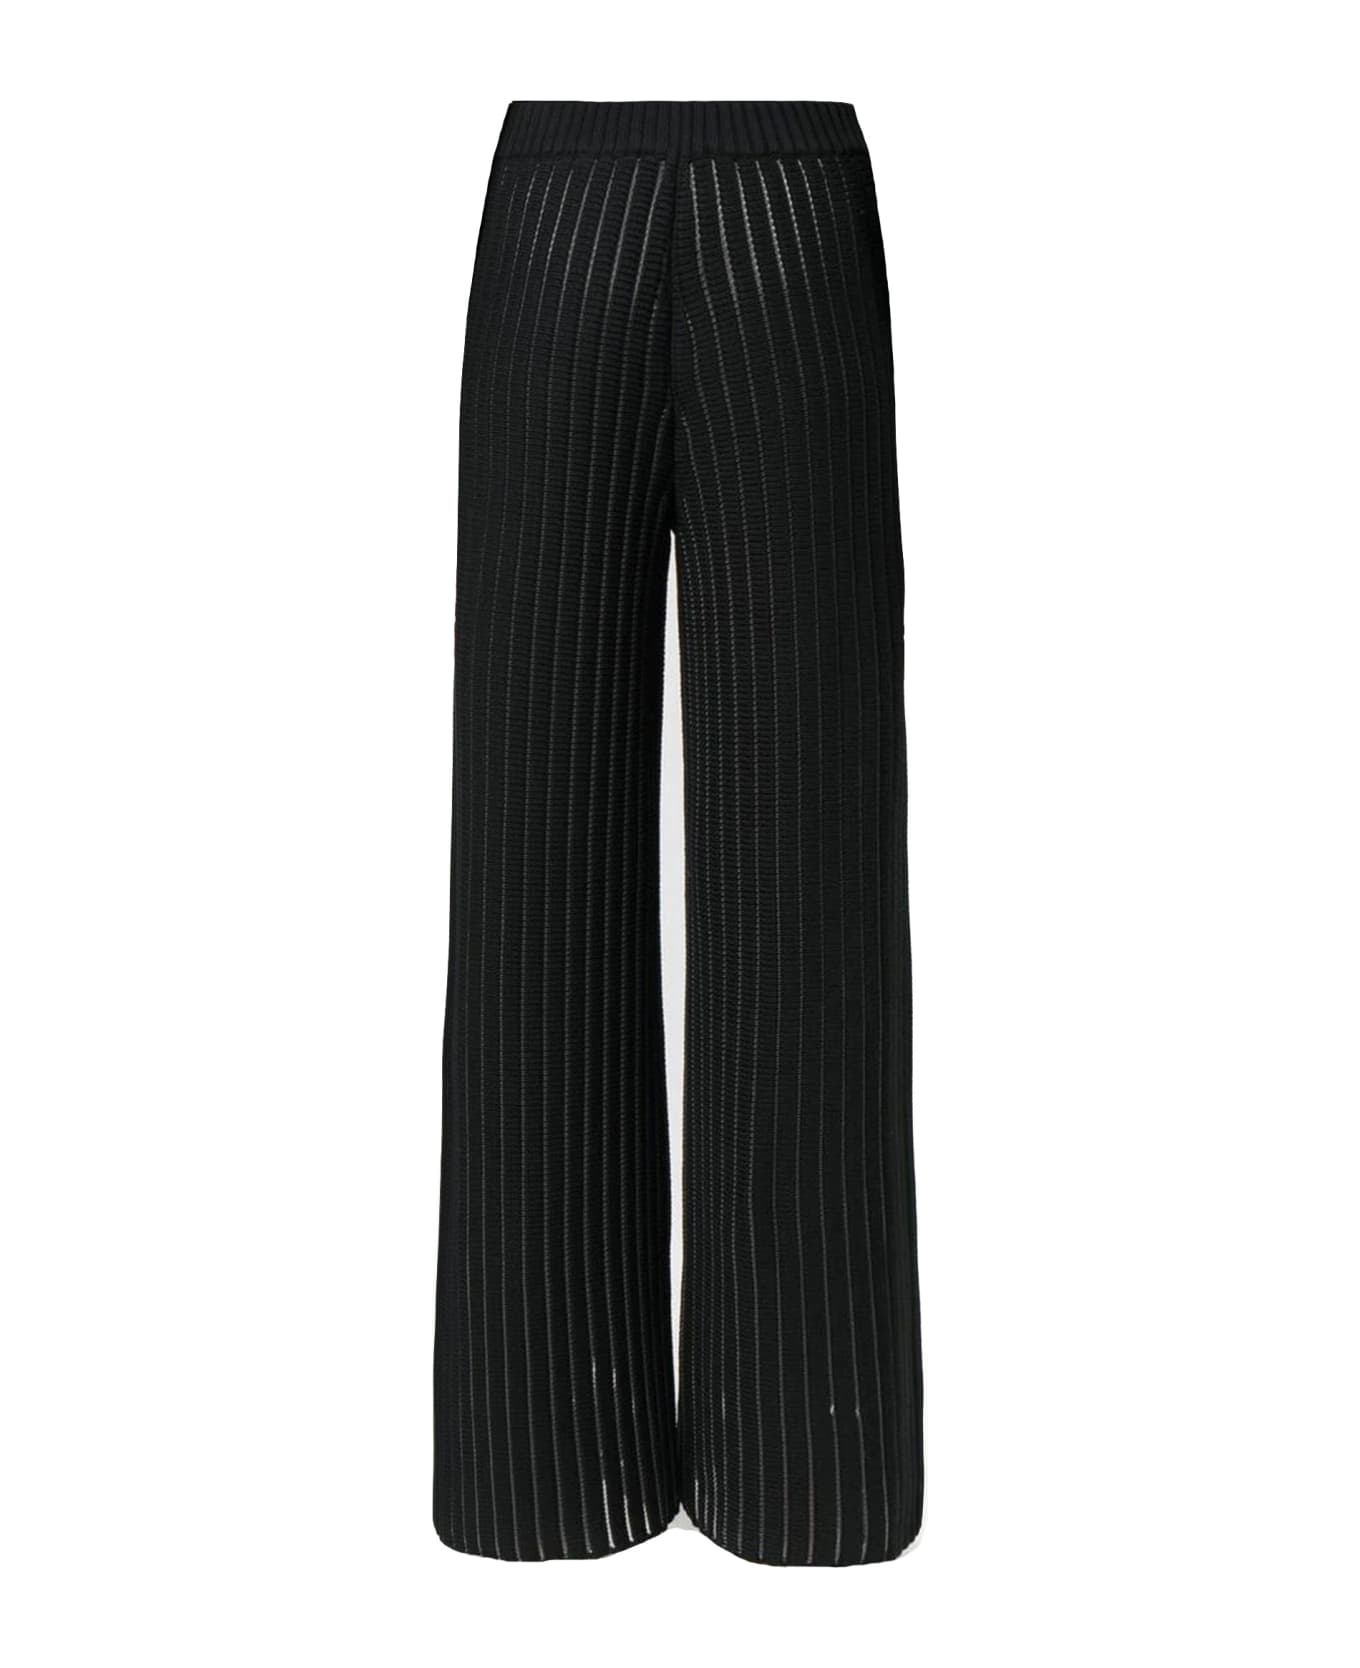 Fabiana Filippi Black Cotton Blend Trousers Jean - Nero